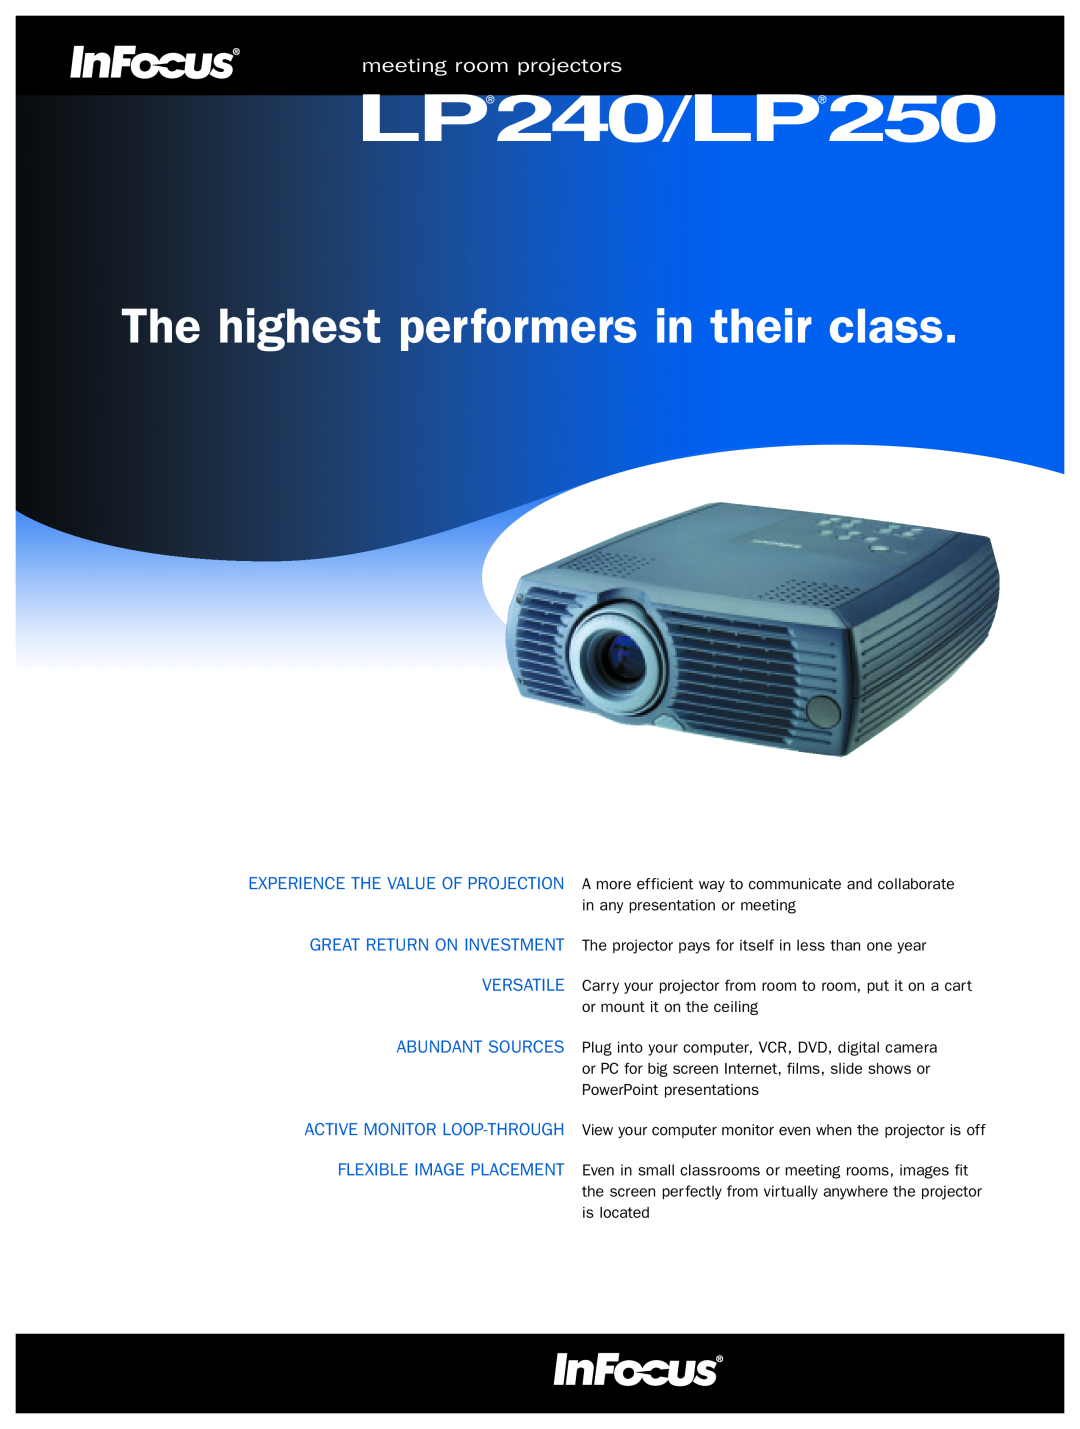 InFocus LP 240/LP 250 manual meeting room projectors, LP240/LP250, The highest performers in their class 